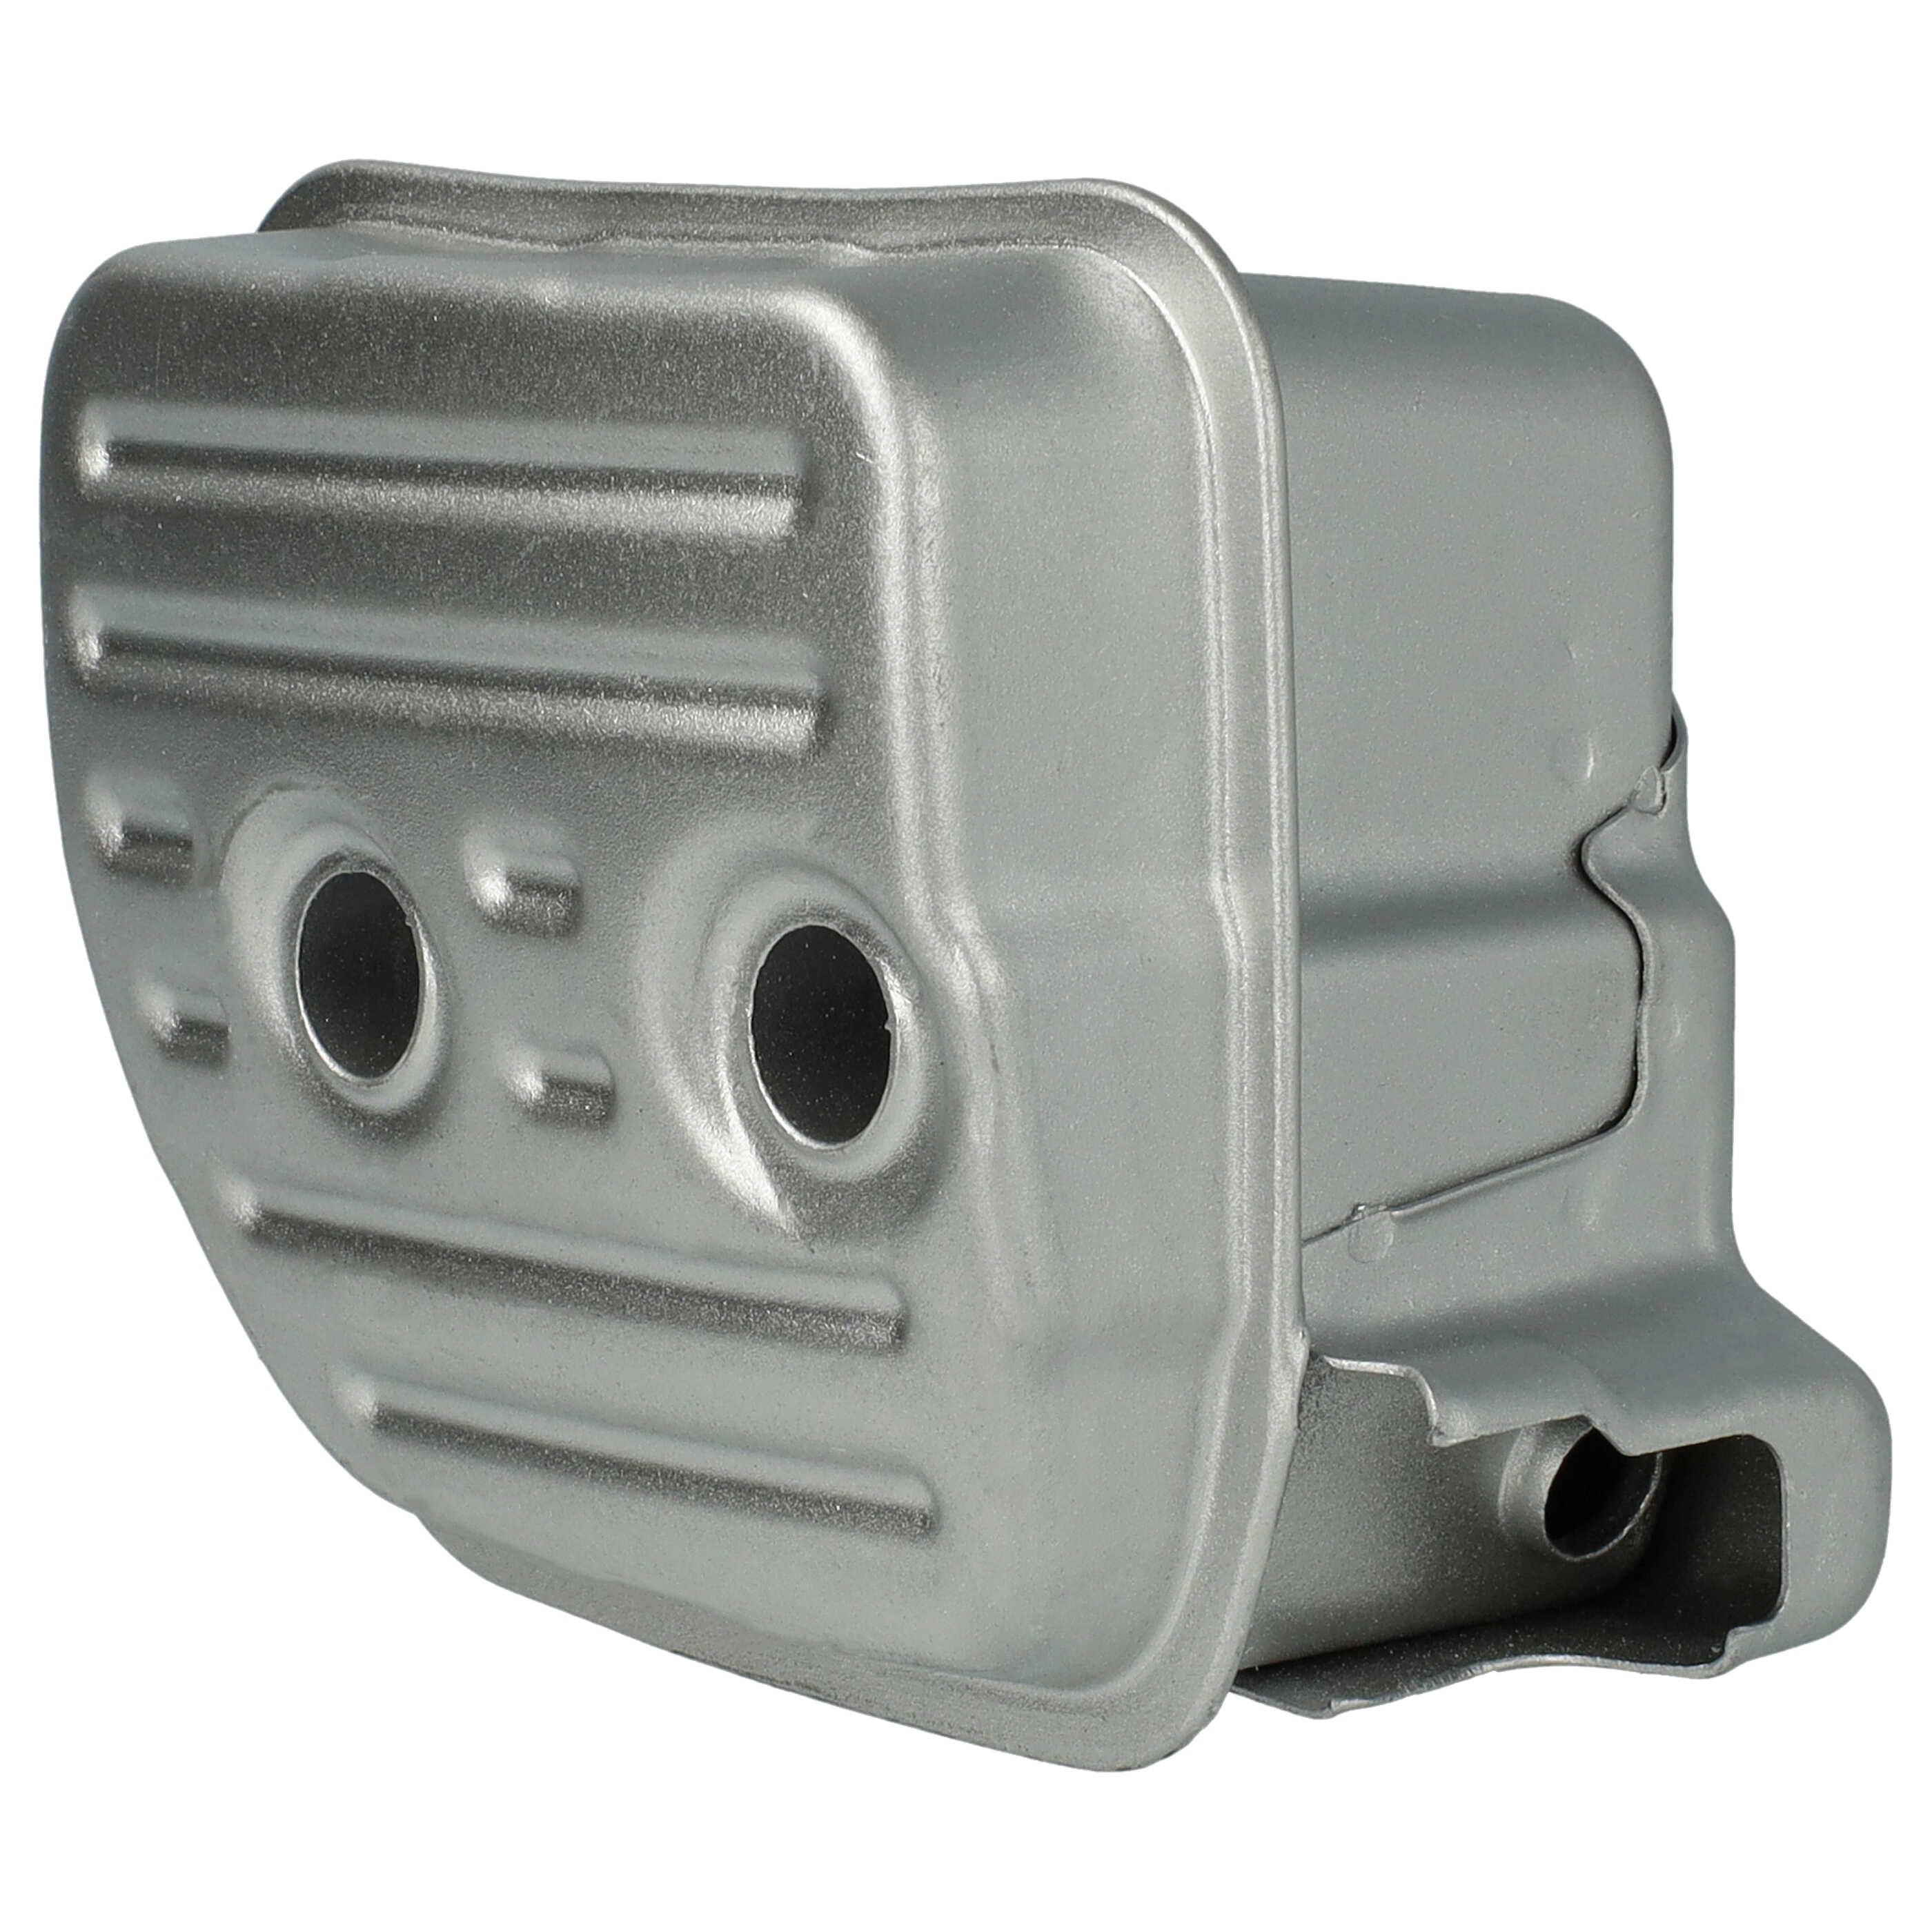 Exhaust Muffler replaces Stihl 1143 140 0661 for StihlPower Saw - 11 x 8.4 x 6.5 cm